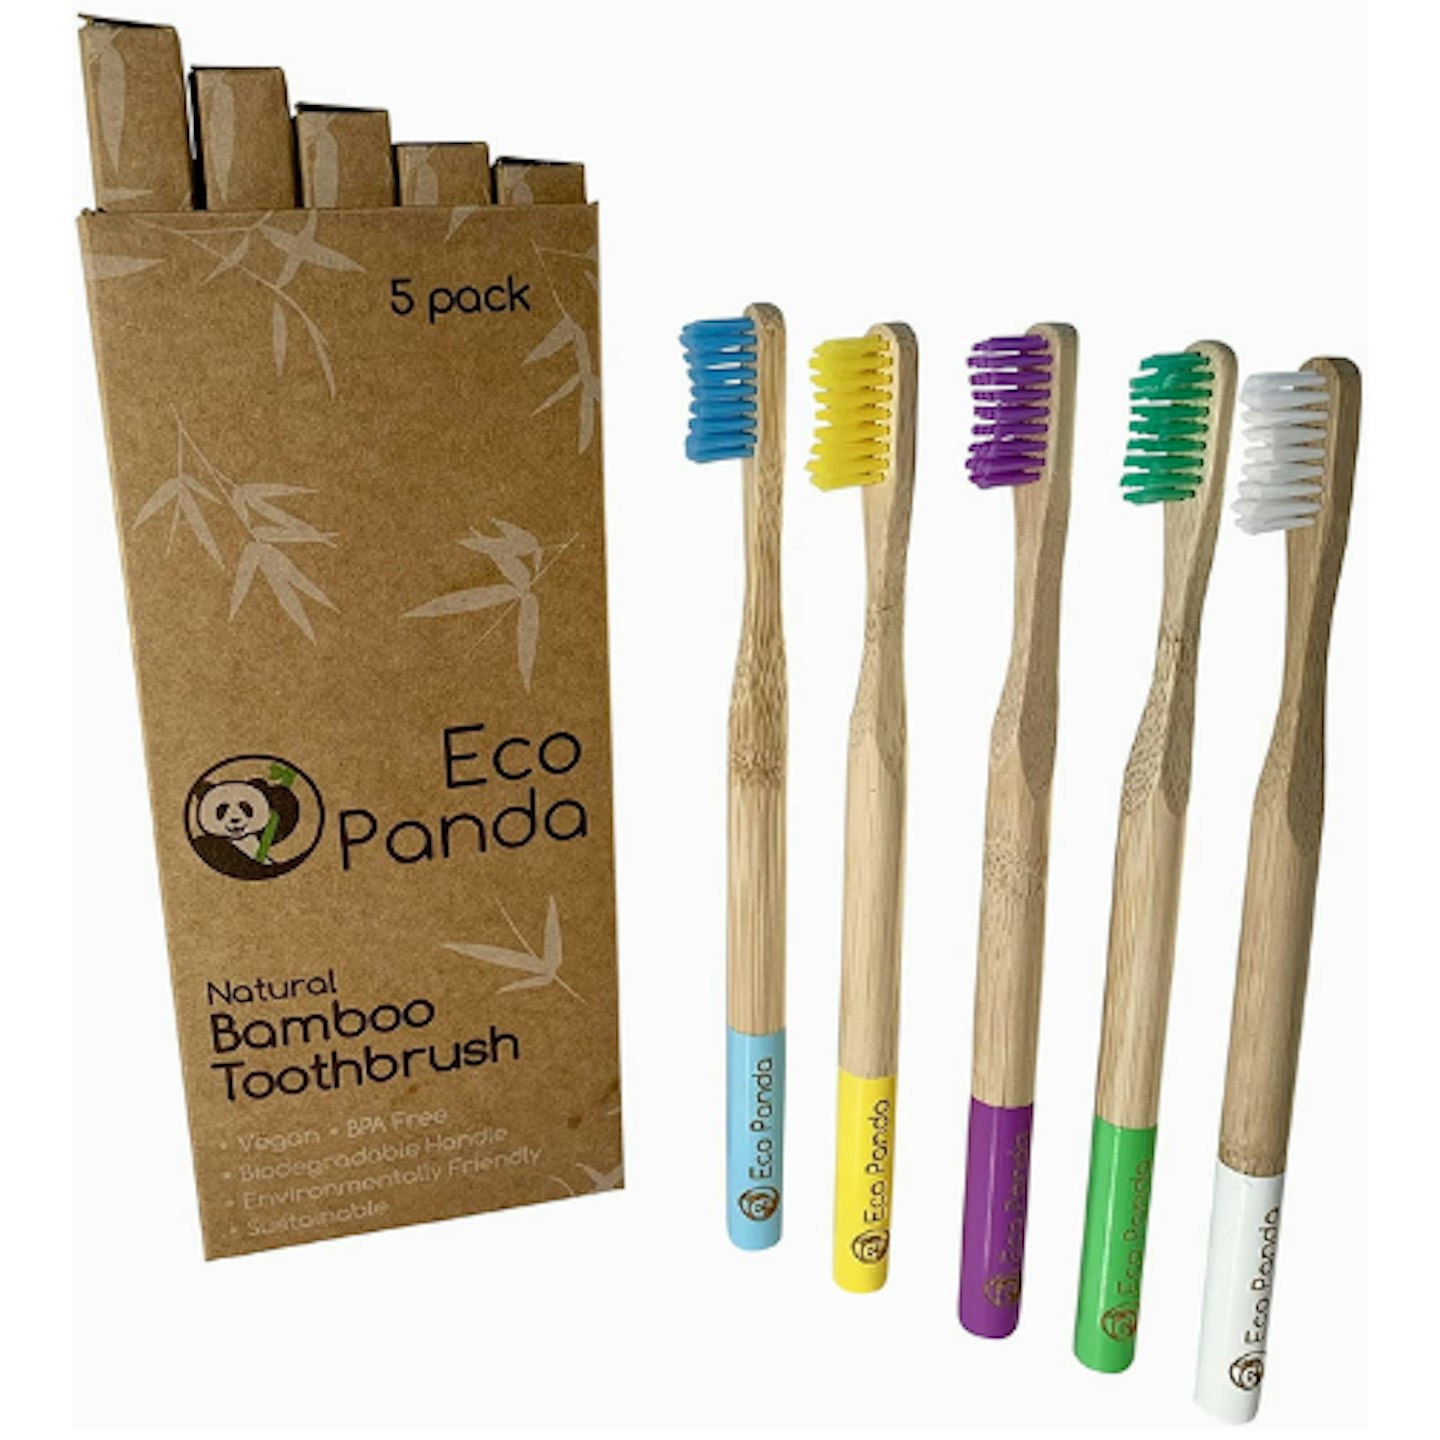 Eco Panda Bamboo Toothbrushes, 5 Pack